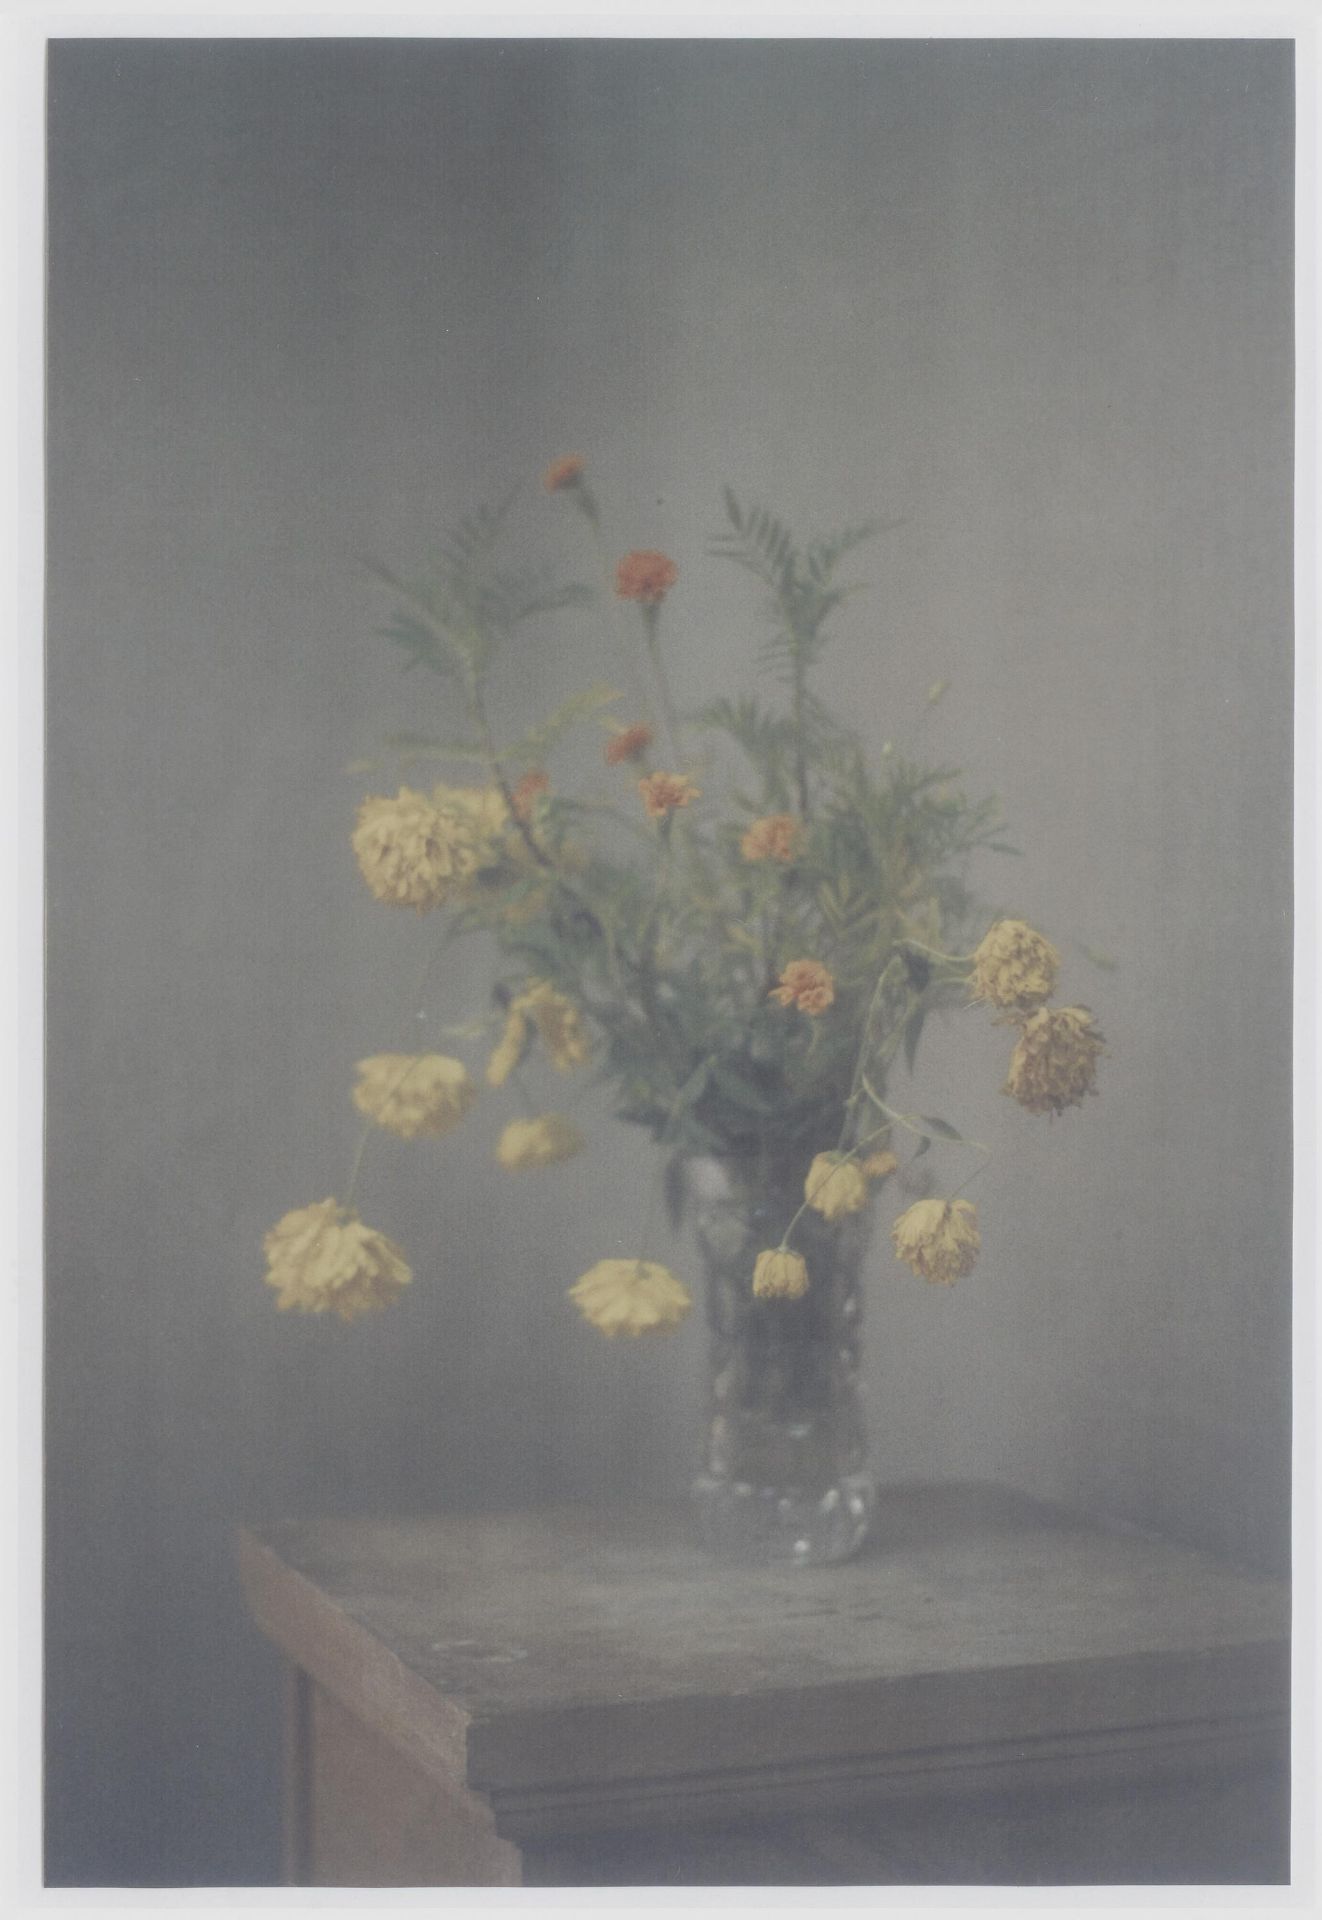 KERBER, INGA1982 BerlinTitel: Cliché of a flower bouquet X (5-teiliges Werk). Datierung: 2012. - Image 2 of 16